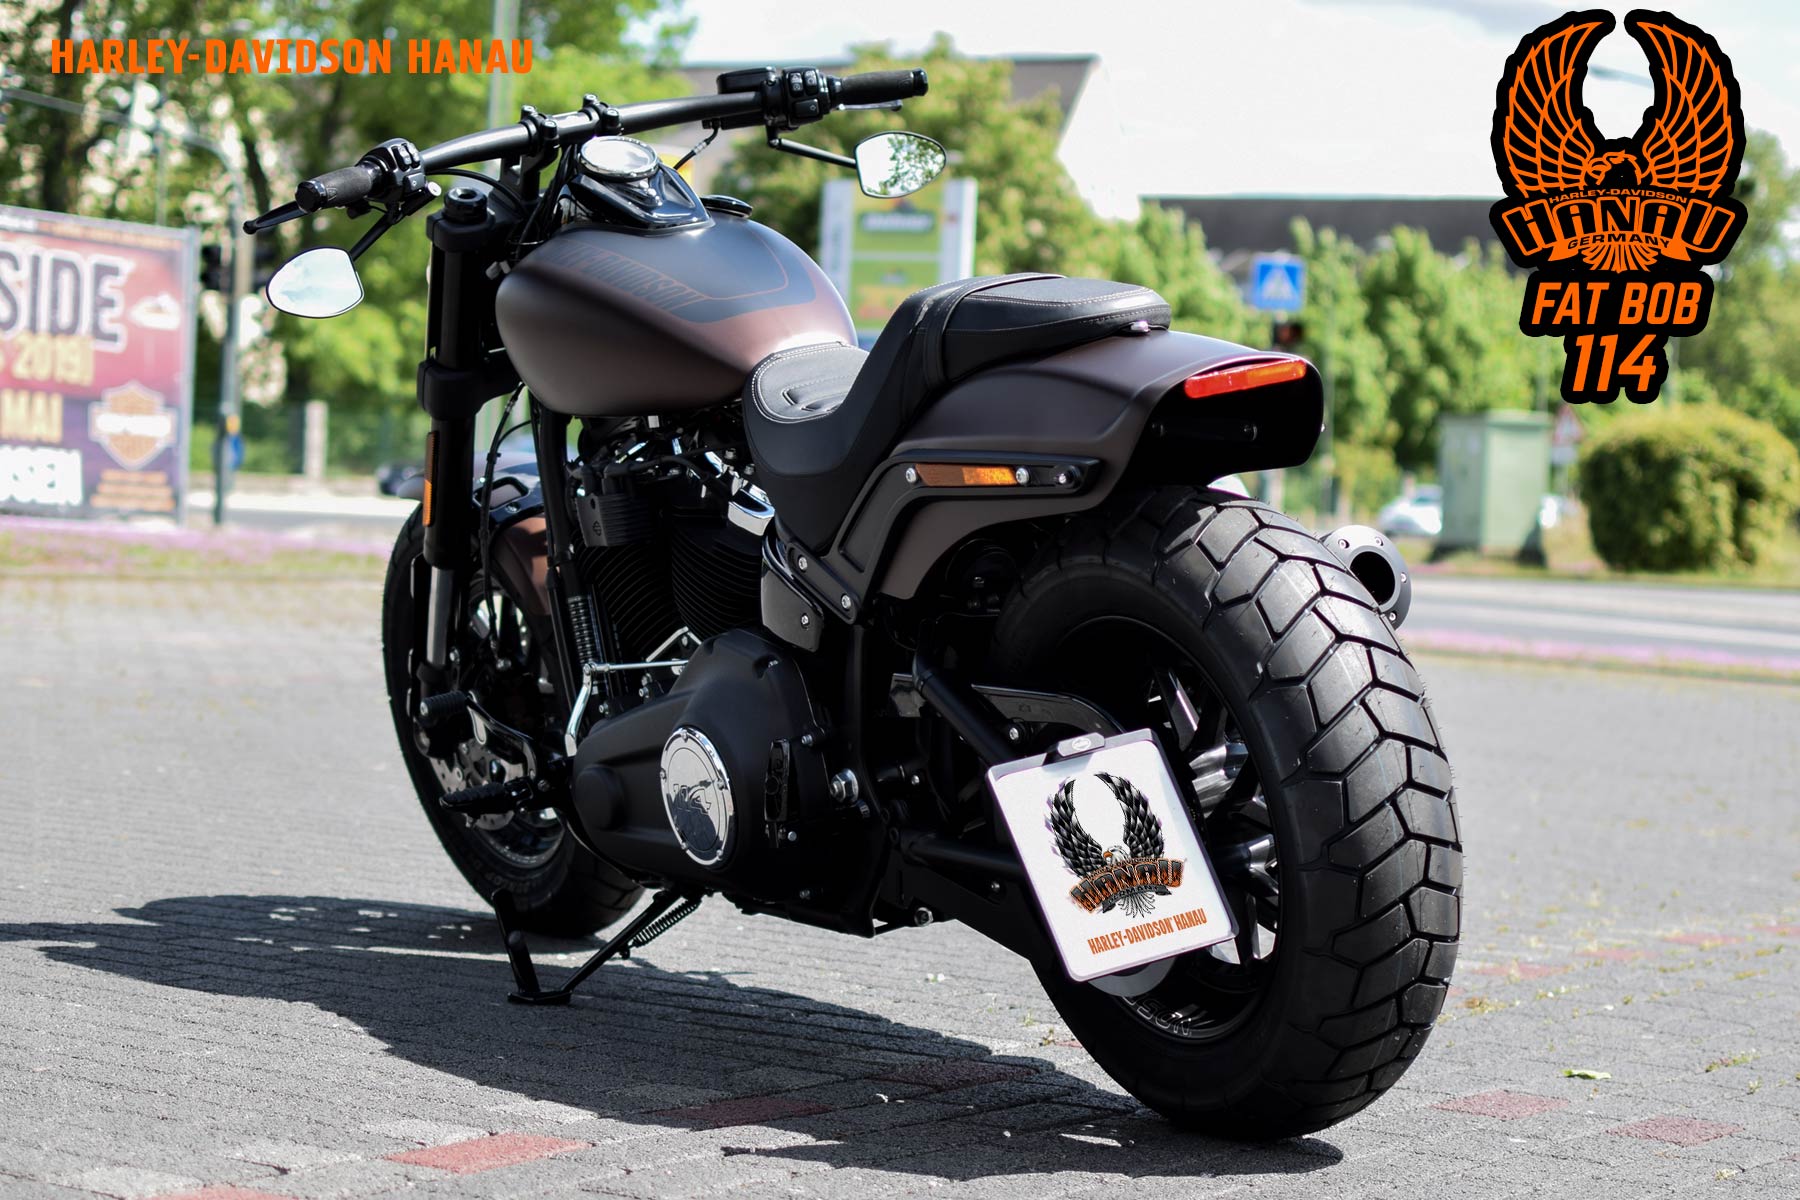 Harley-Davidson Hanau Fat Bob 114 Customclub